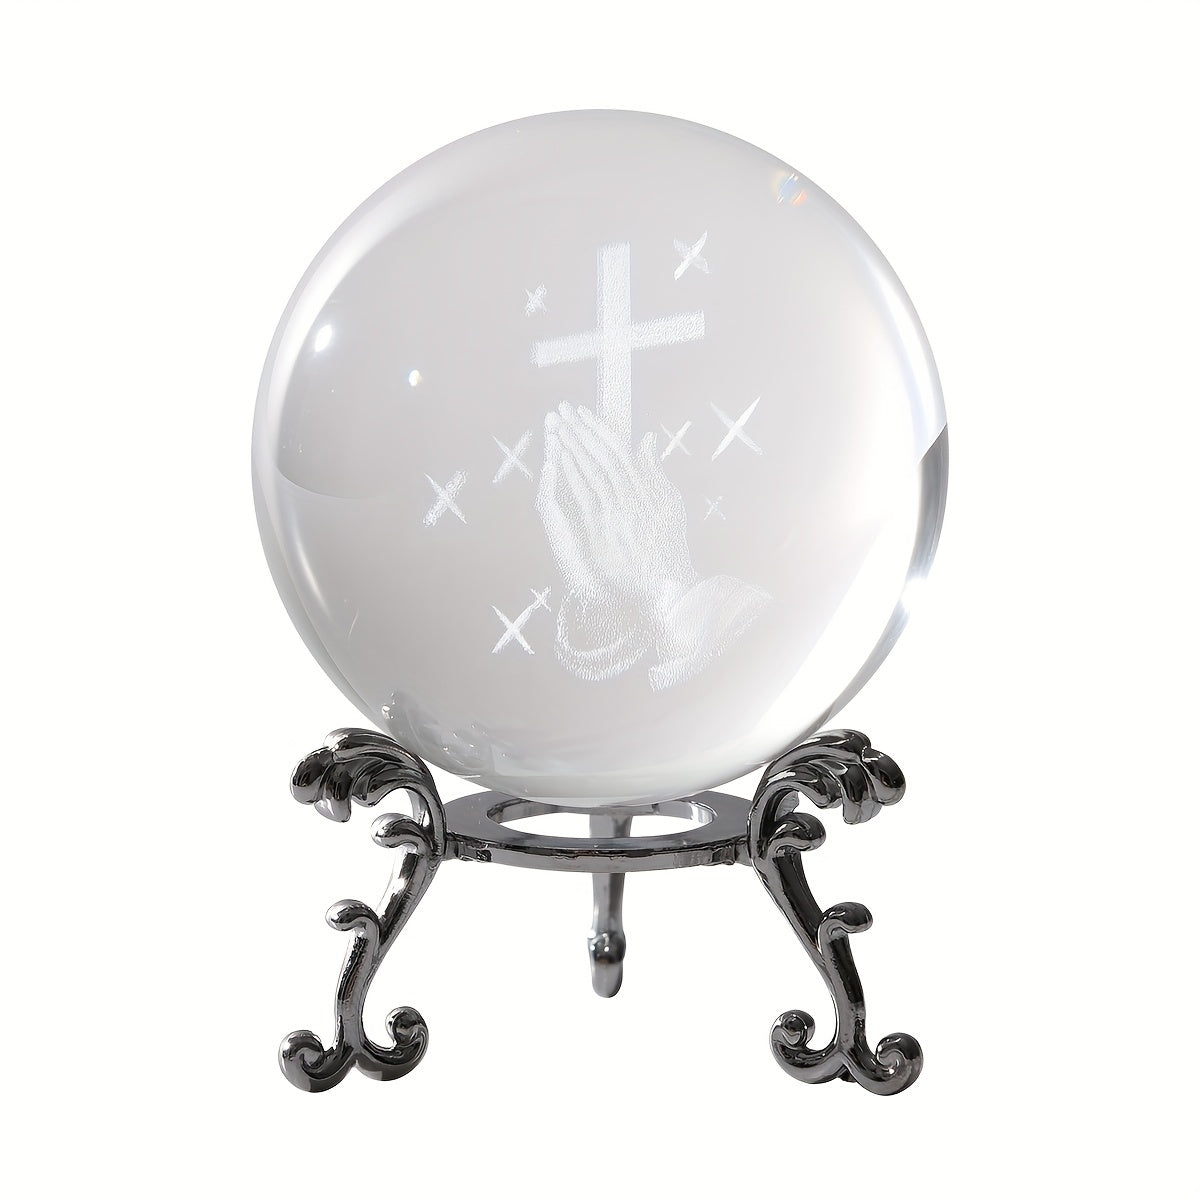 Pray & Focus On The Cross 3D Laser Crystal Ball Christian Gift Idea claimedbygoddesigns